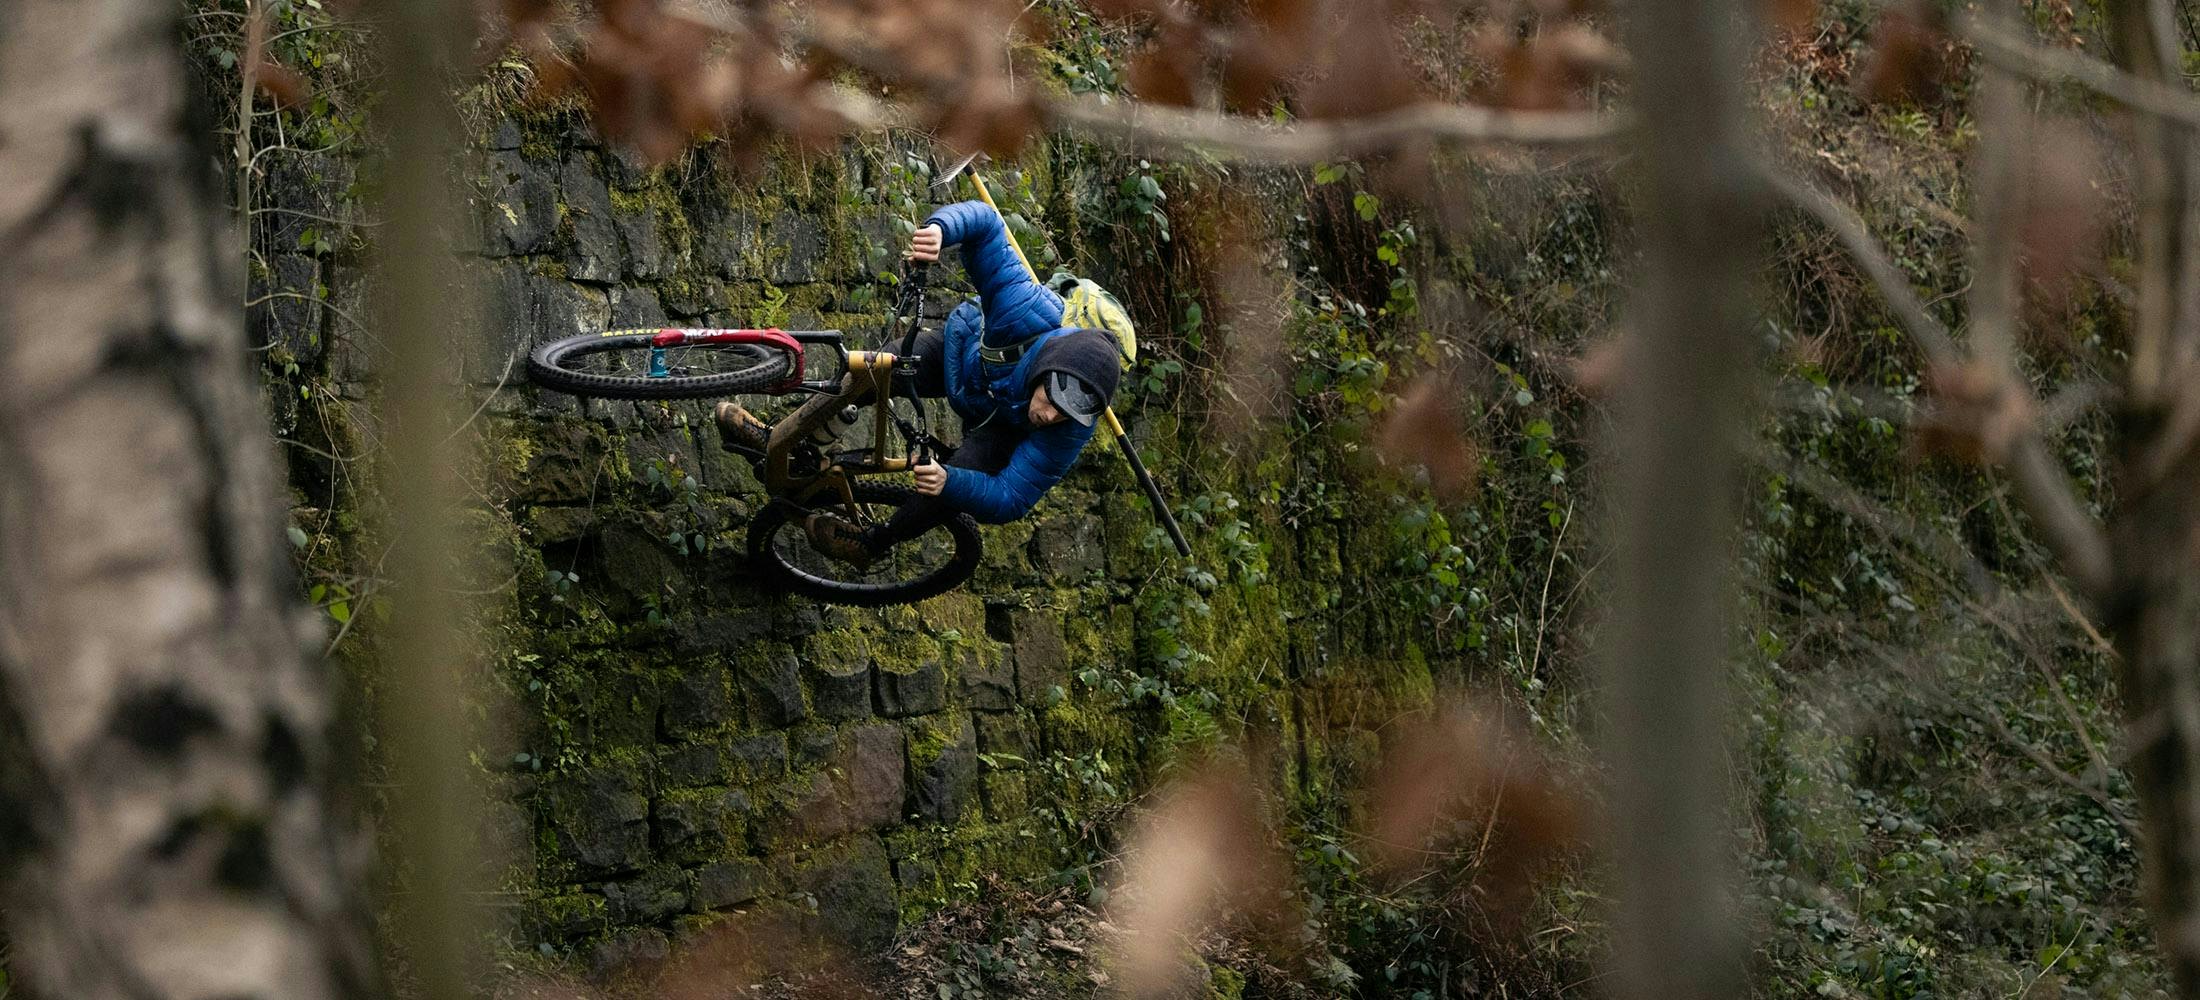 Craig Evans riding a wall ride on his Santa Cruz Bronson